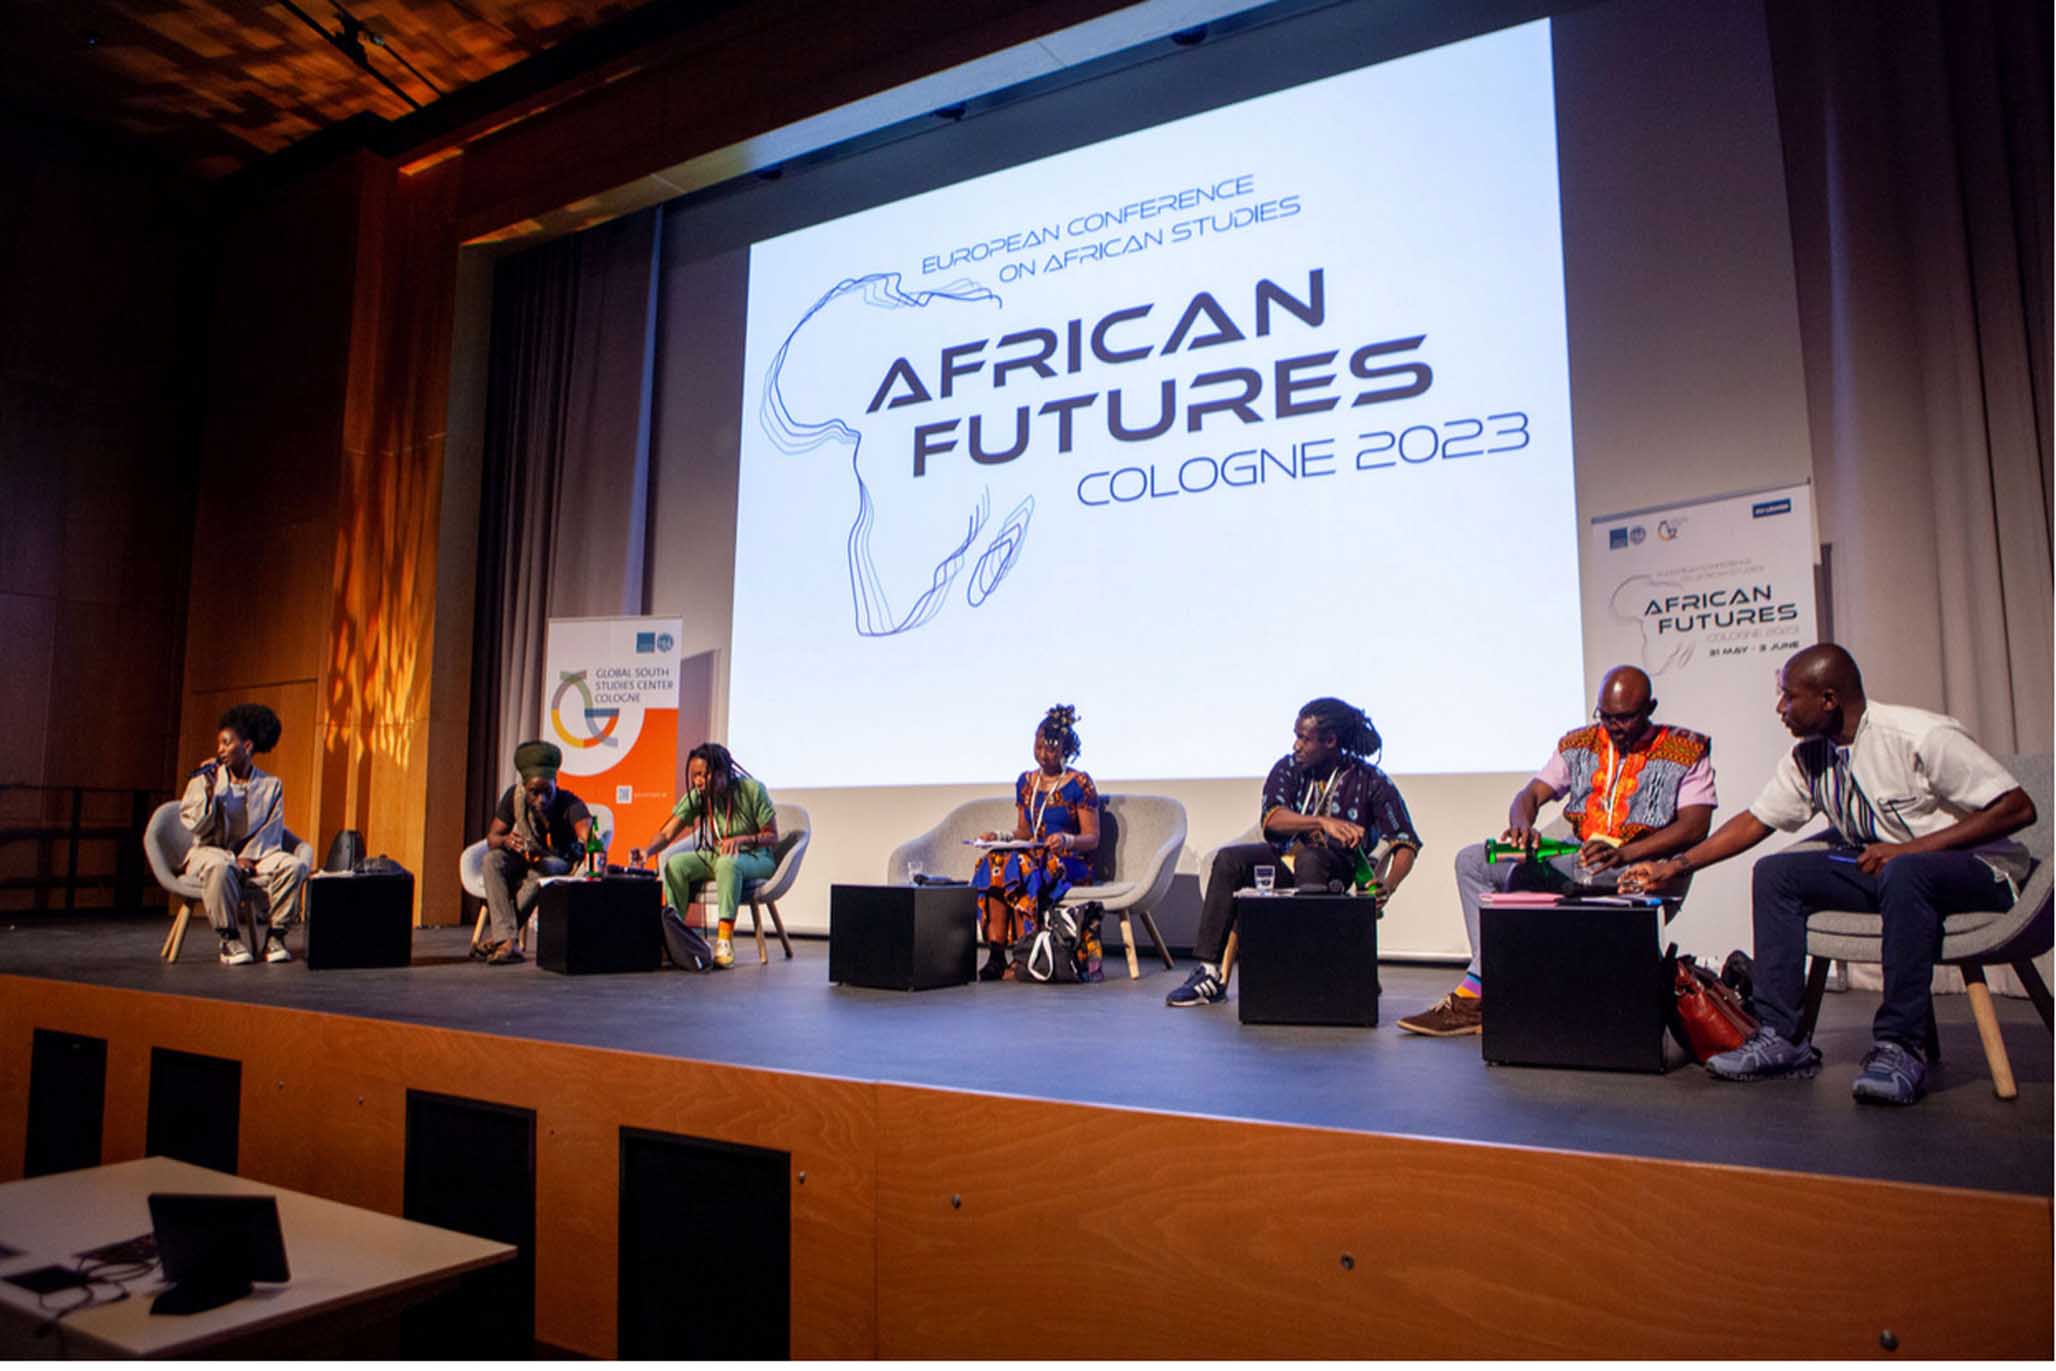 ECAS 9 (European Conference of African Studies) “African Futures”